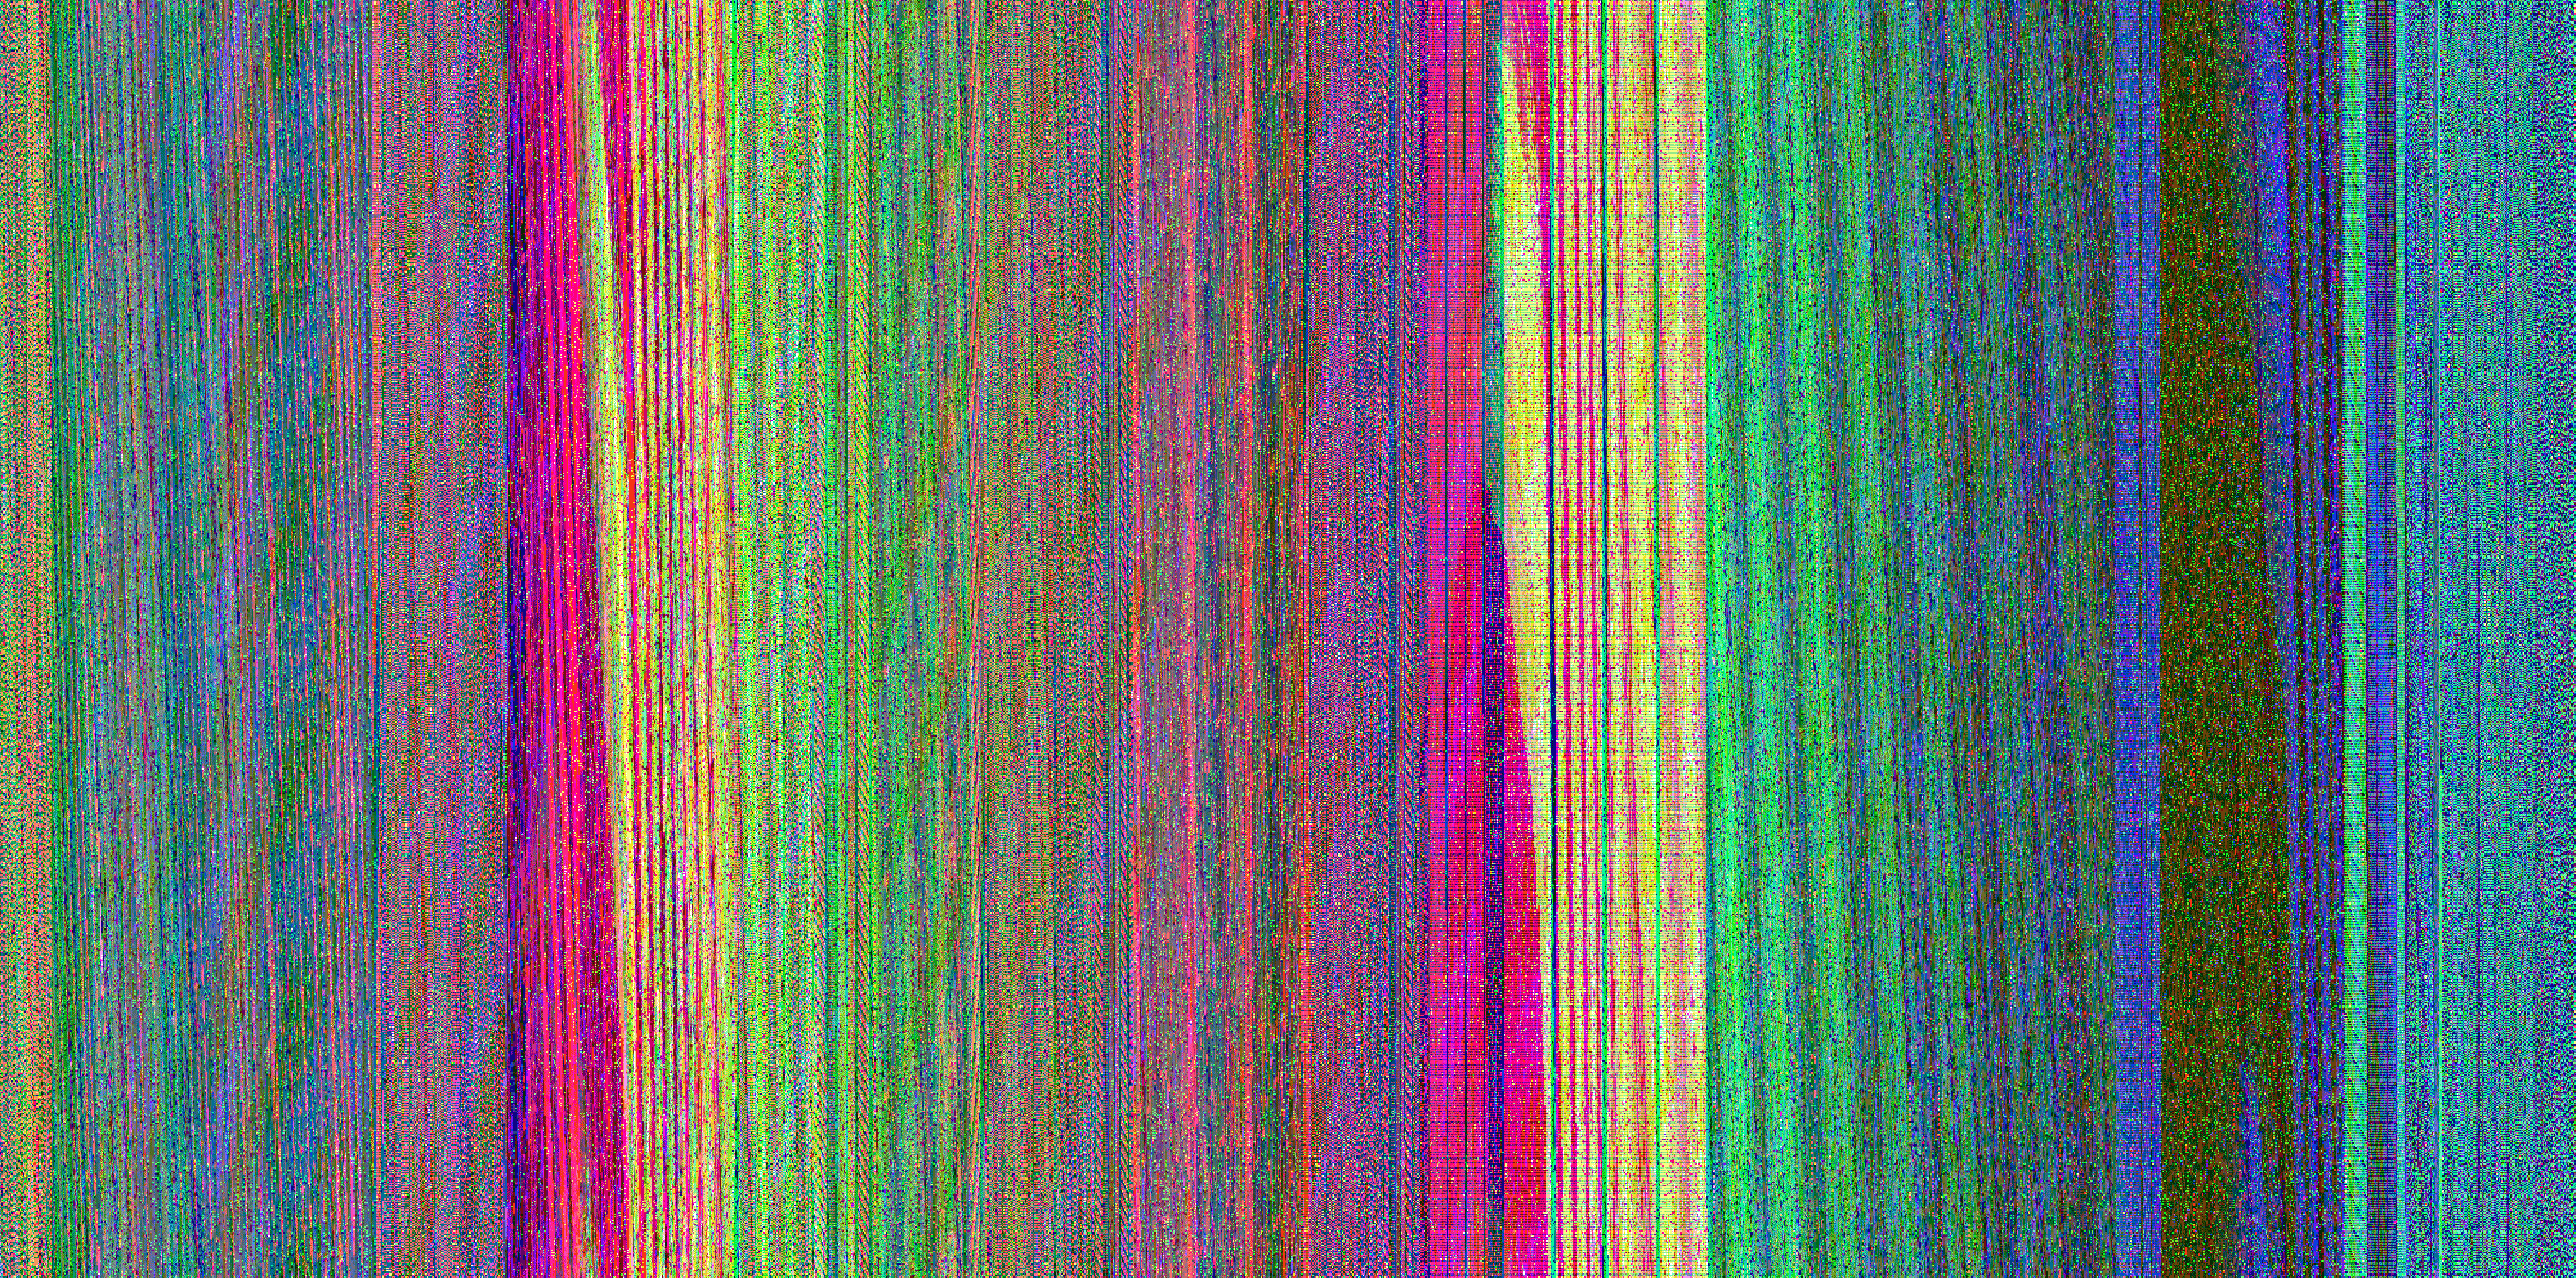 pixelated rainbow curtain